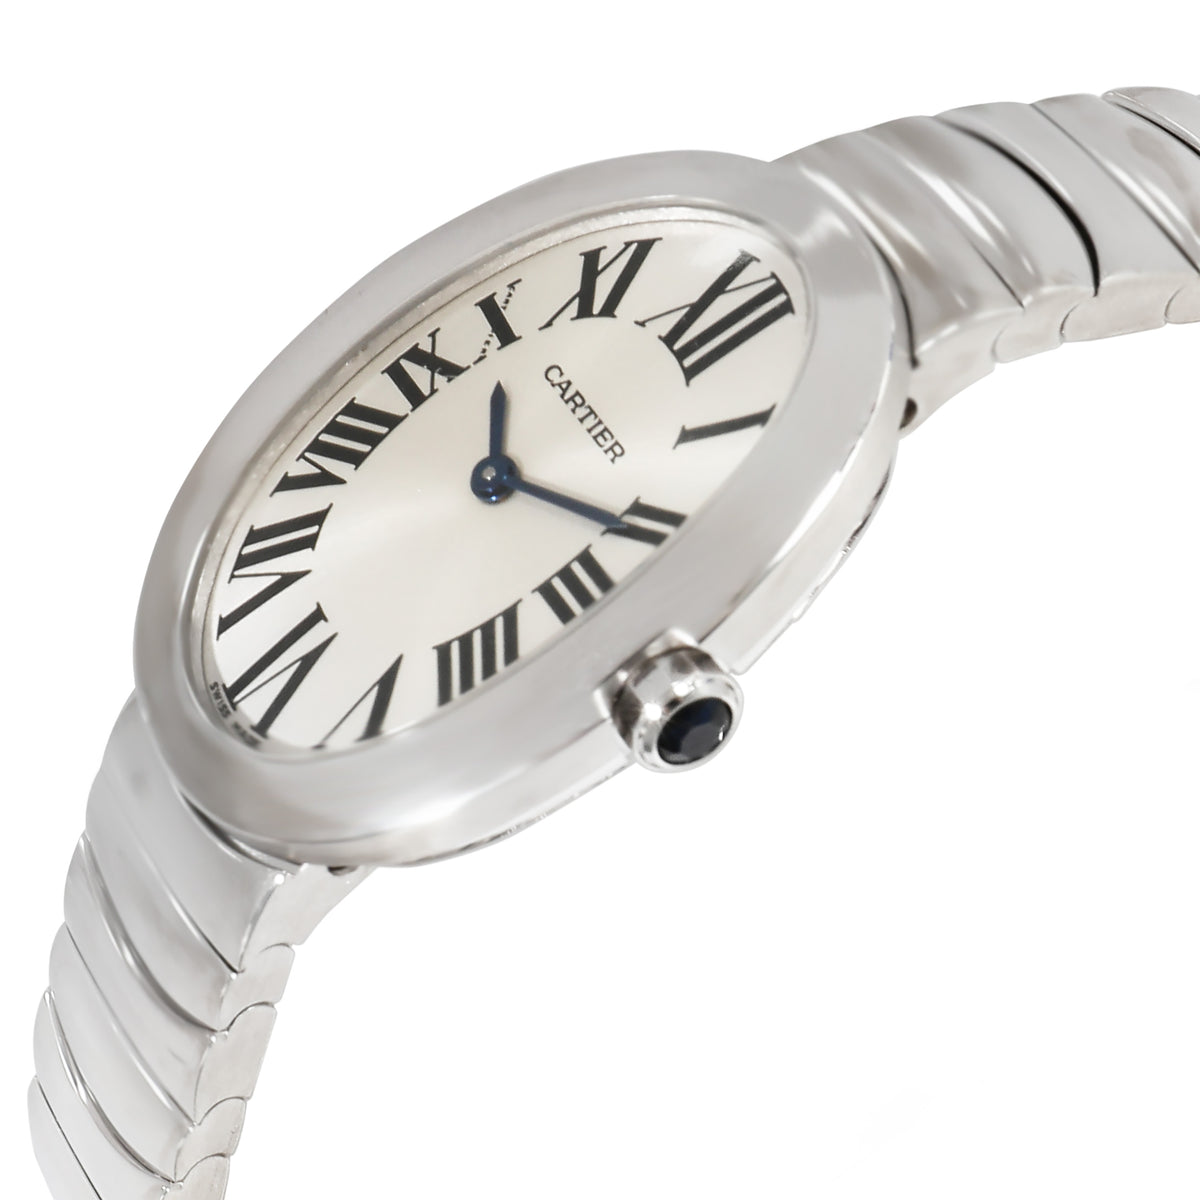 Cartier Baignoire de Cartier W8000006 Women's Watch in 18kt White Gold